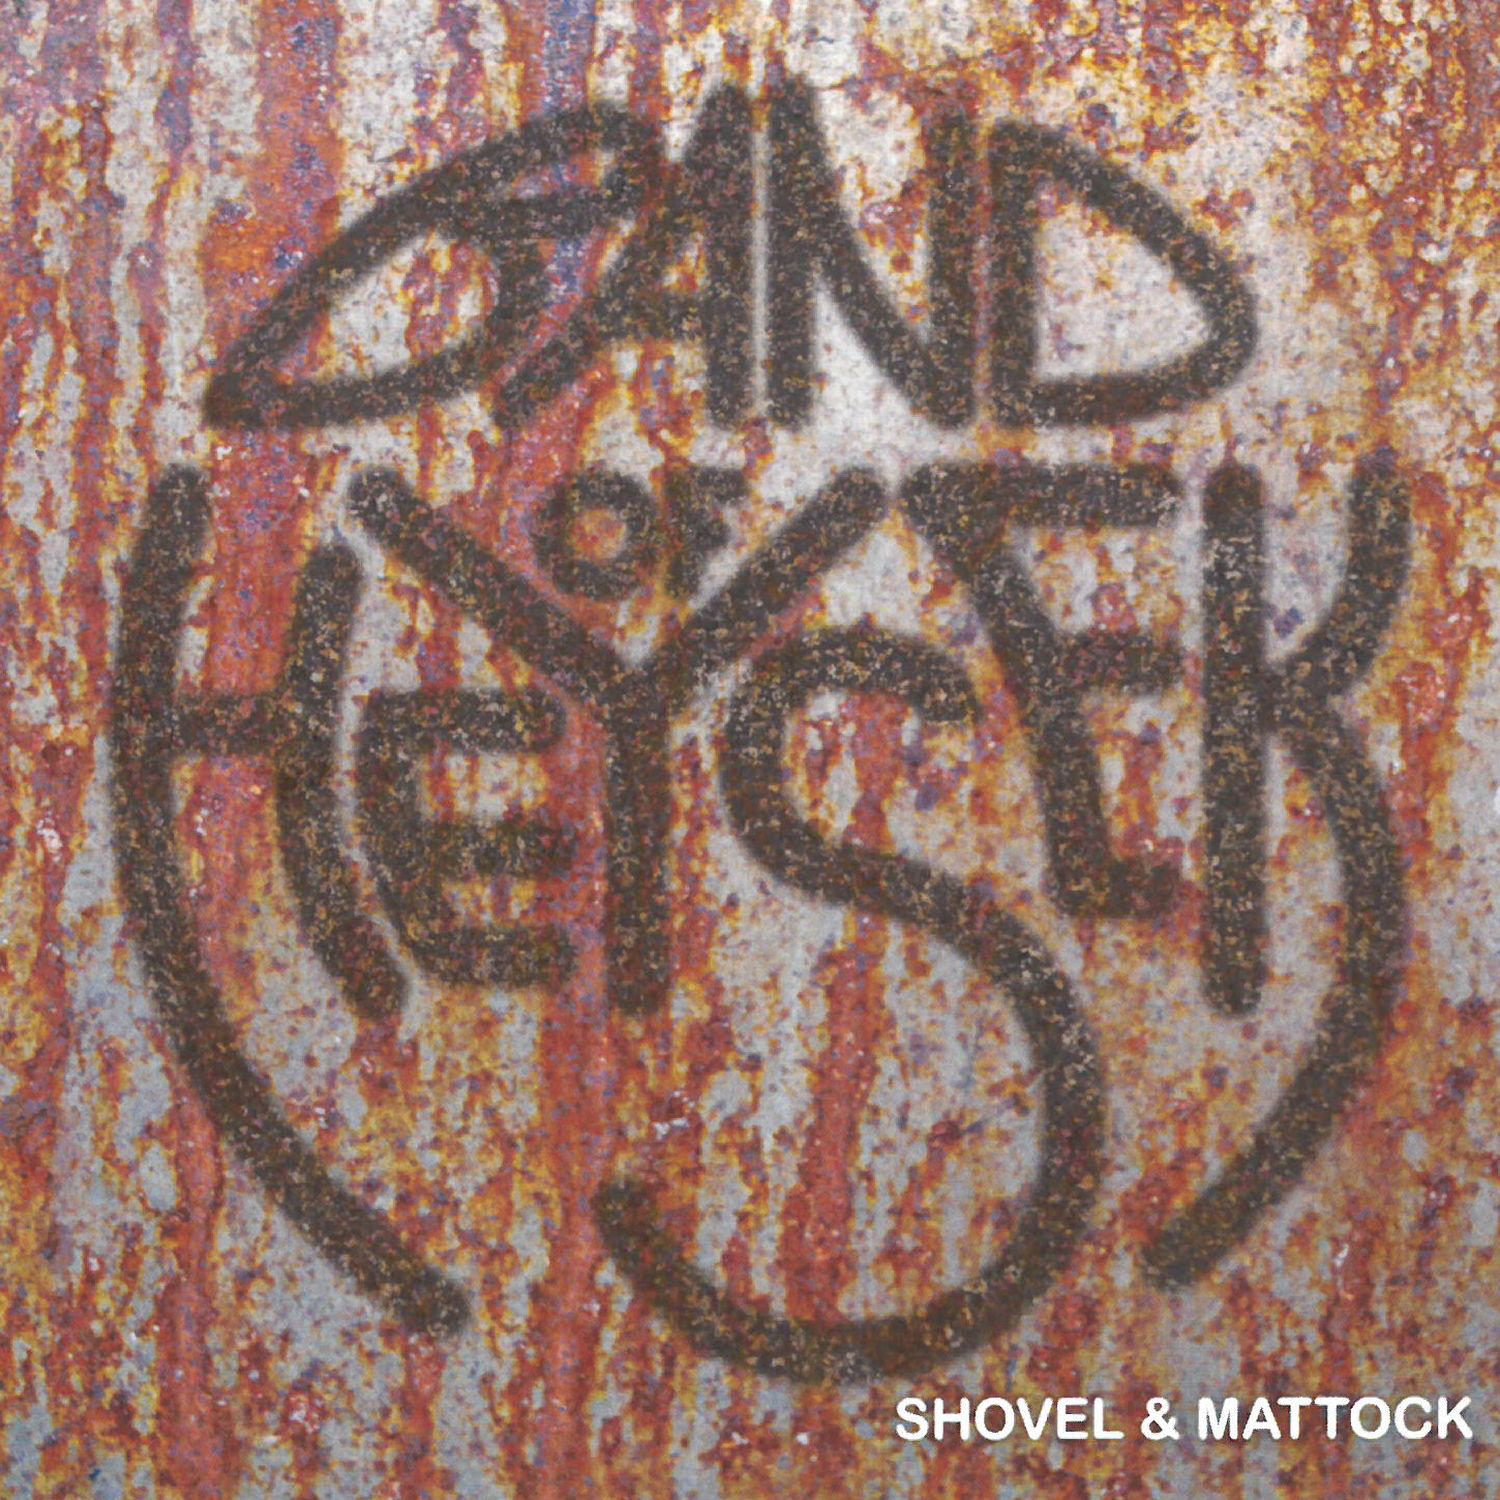 CD Shop - BAND OF HEYSEK SHOVEL & MATTOCK